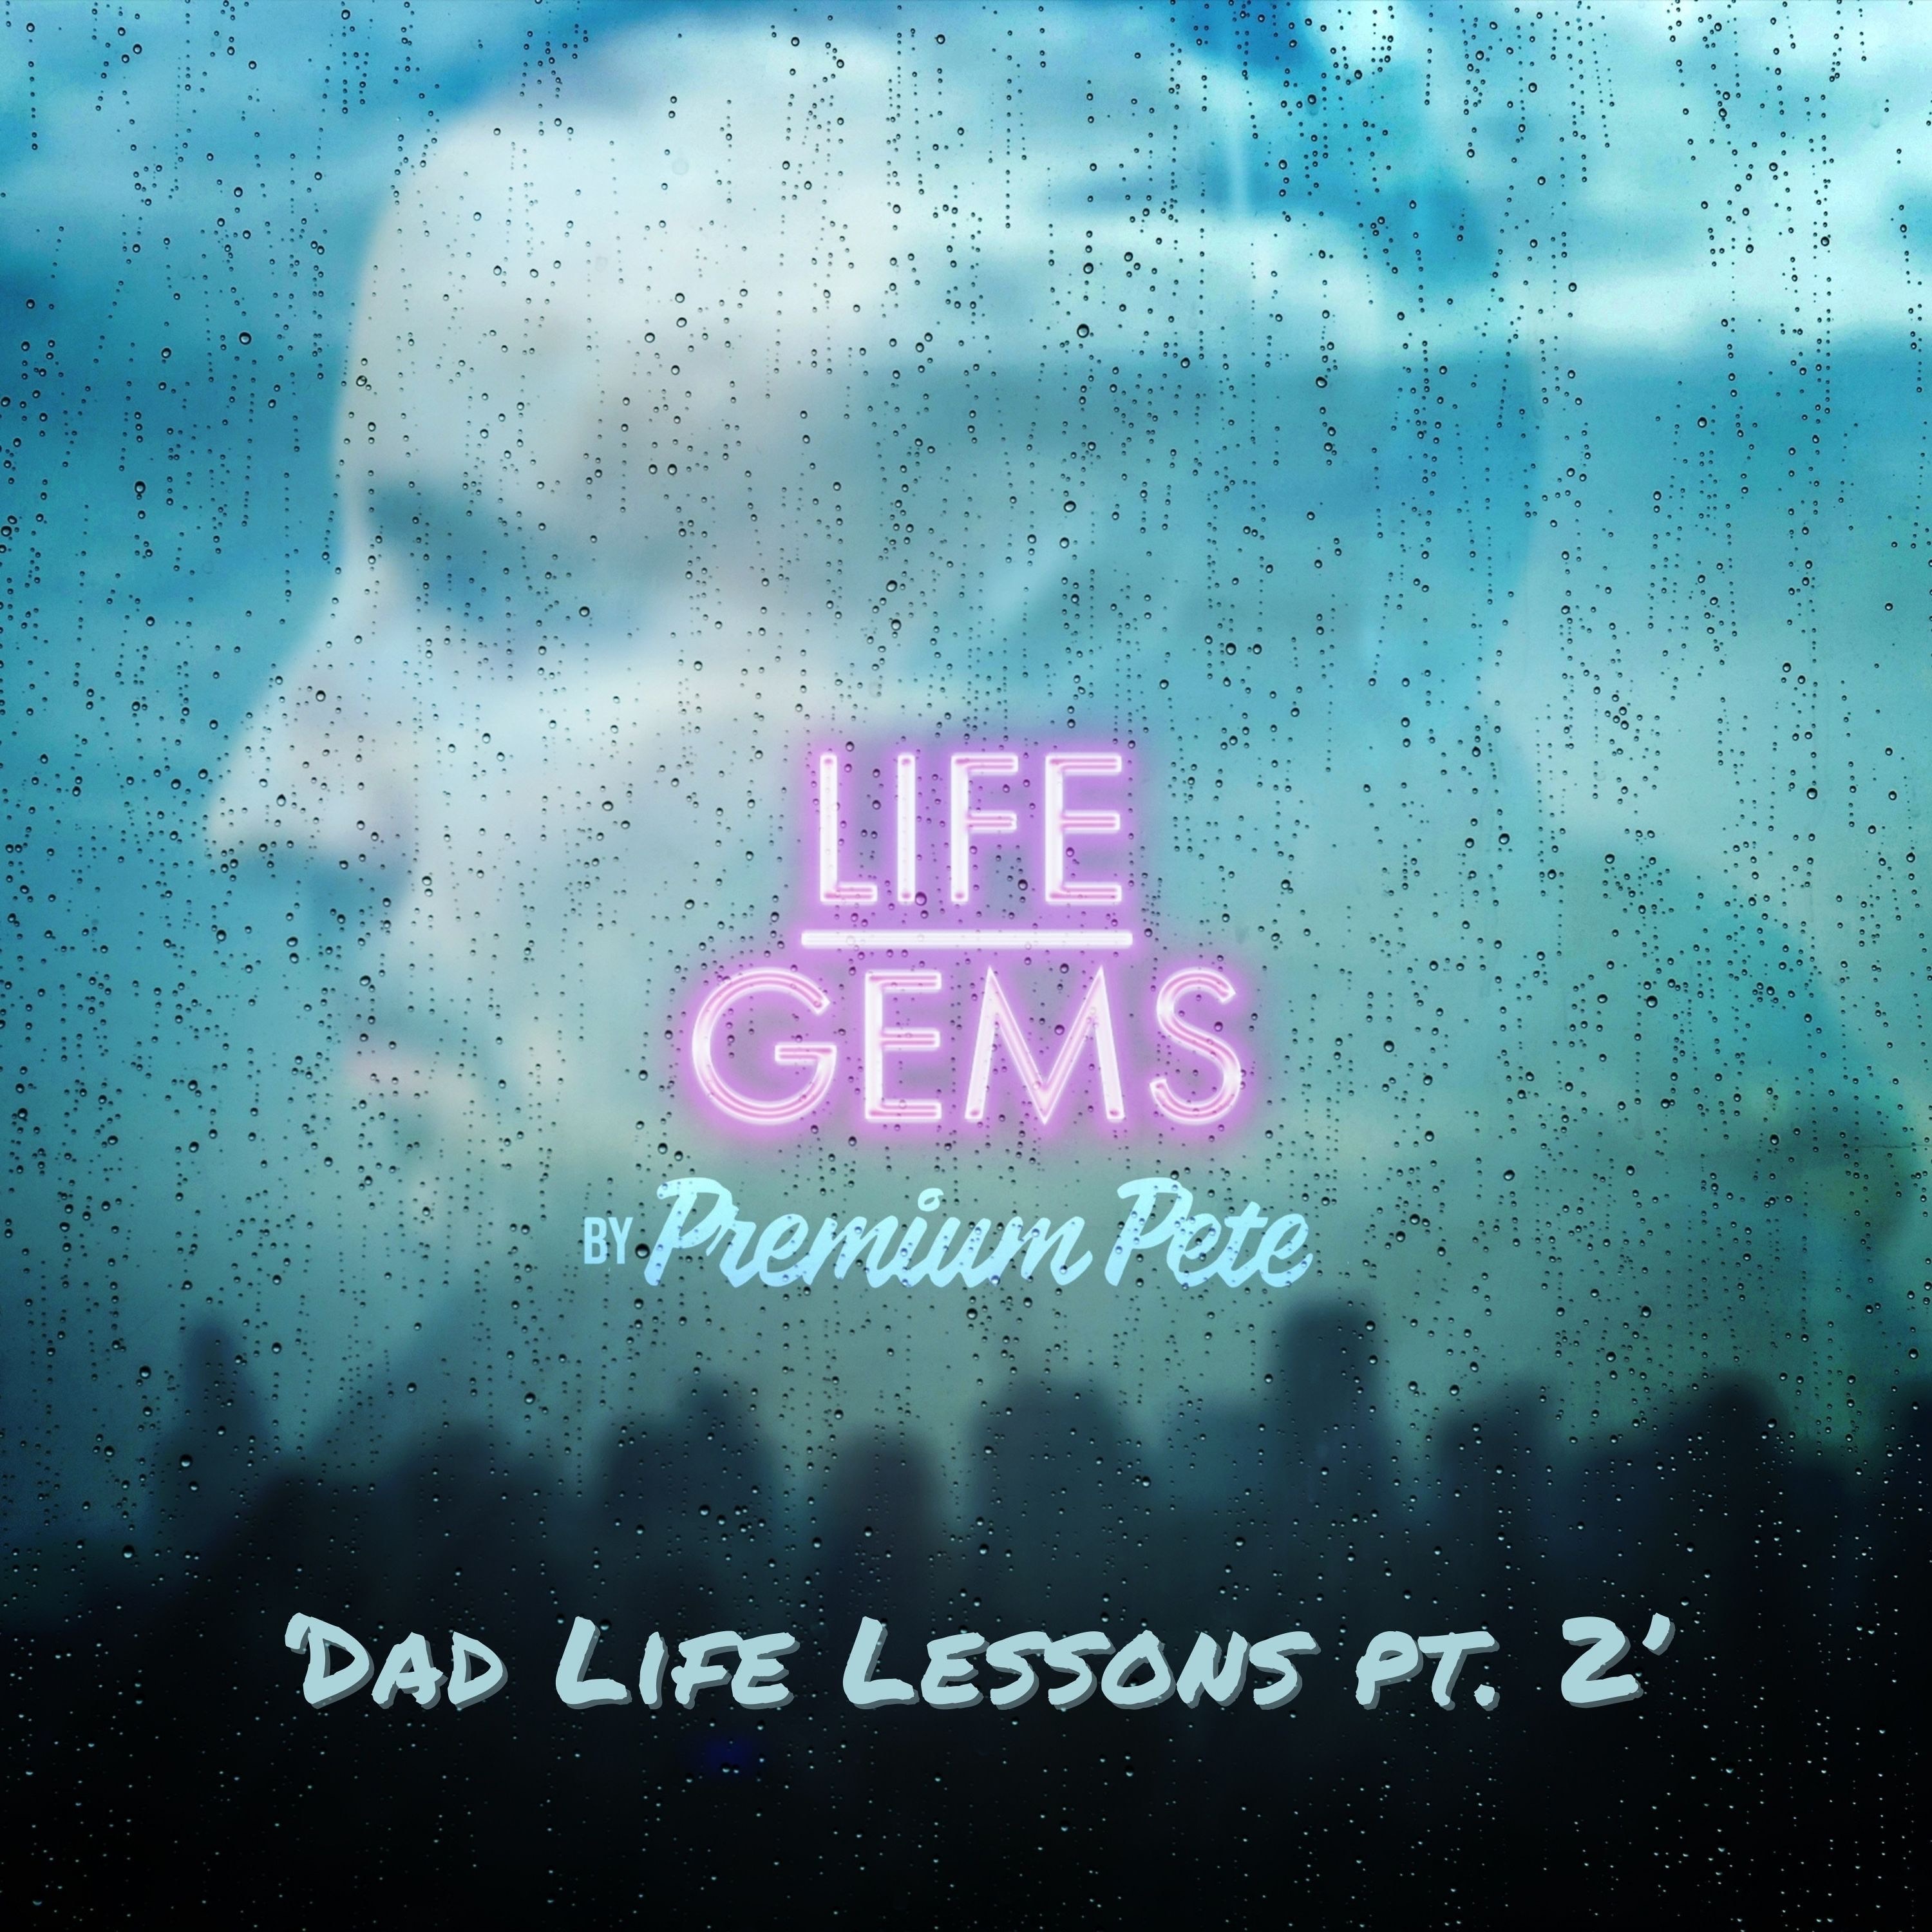 Life Gems "Dad Life Lessons Pt 2"